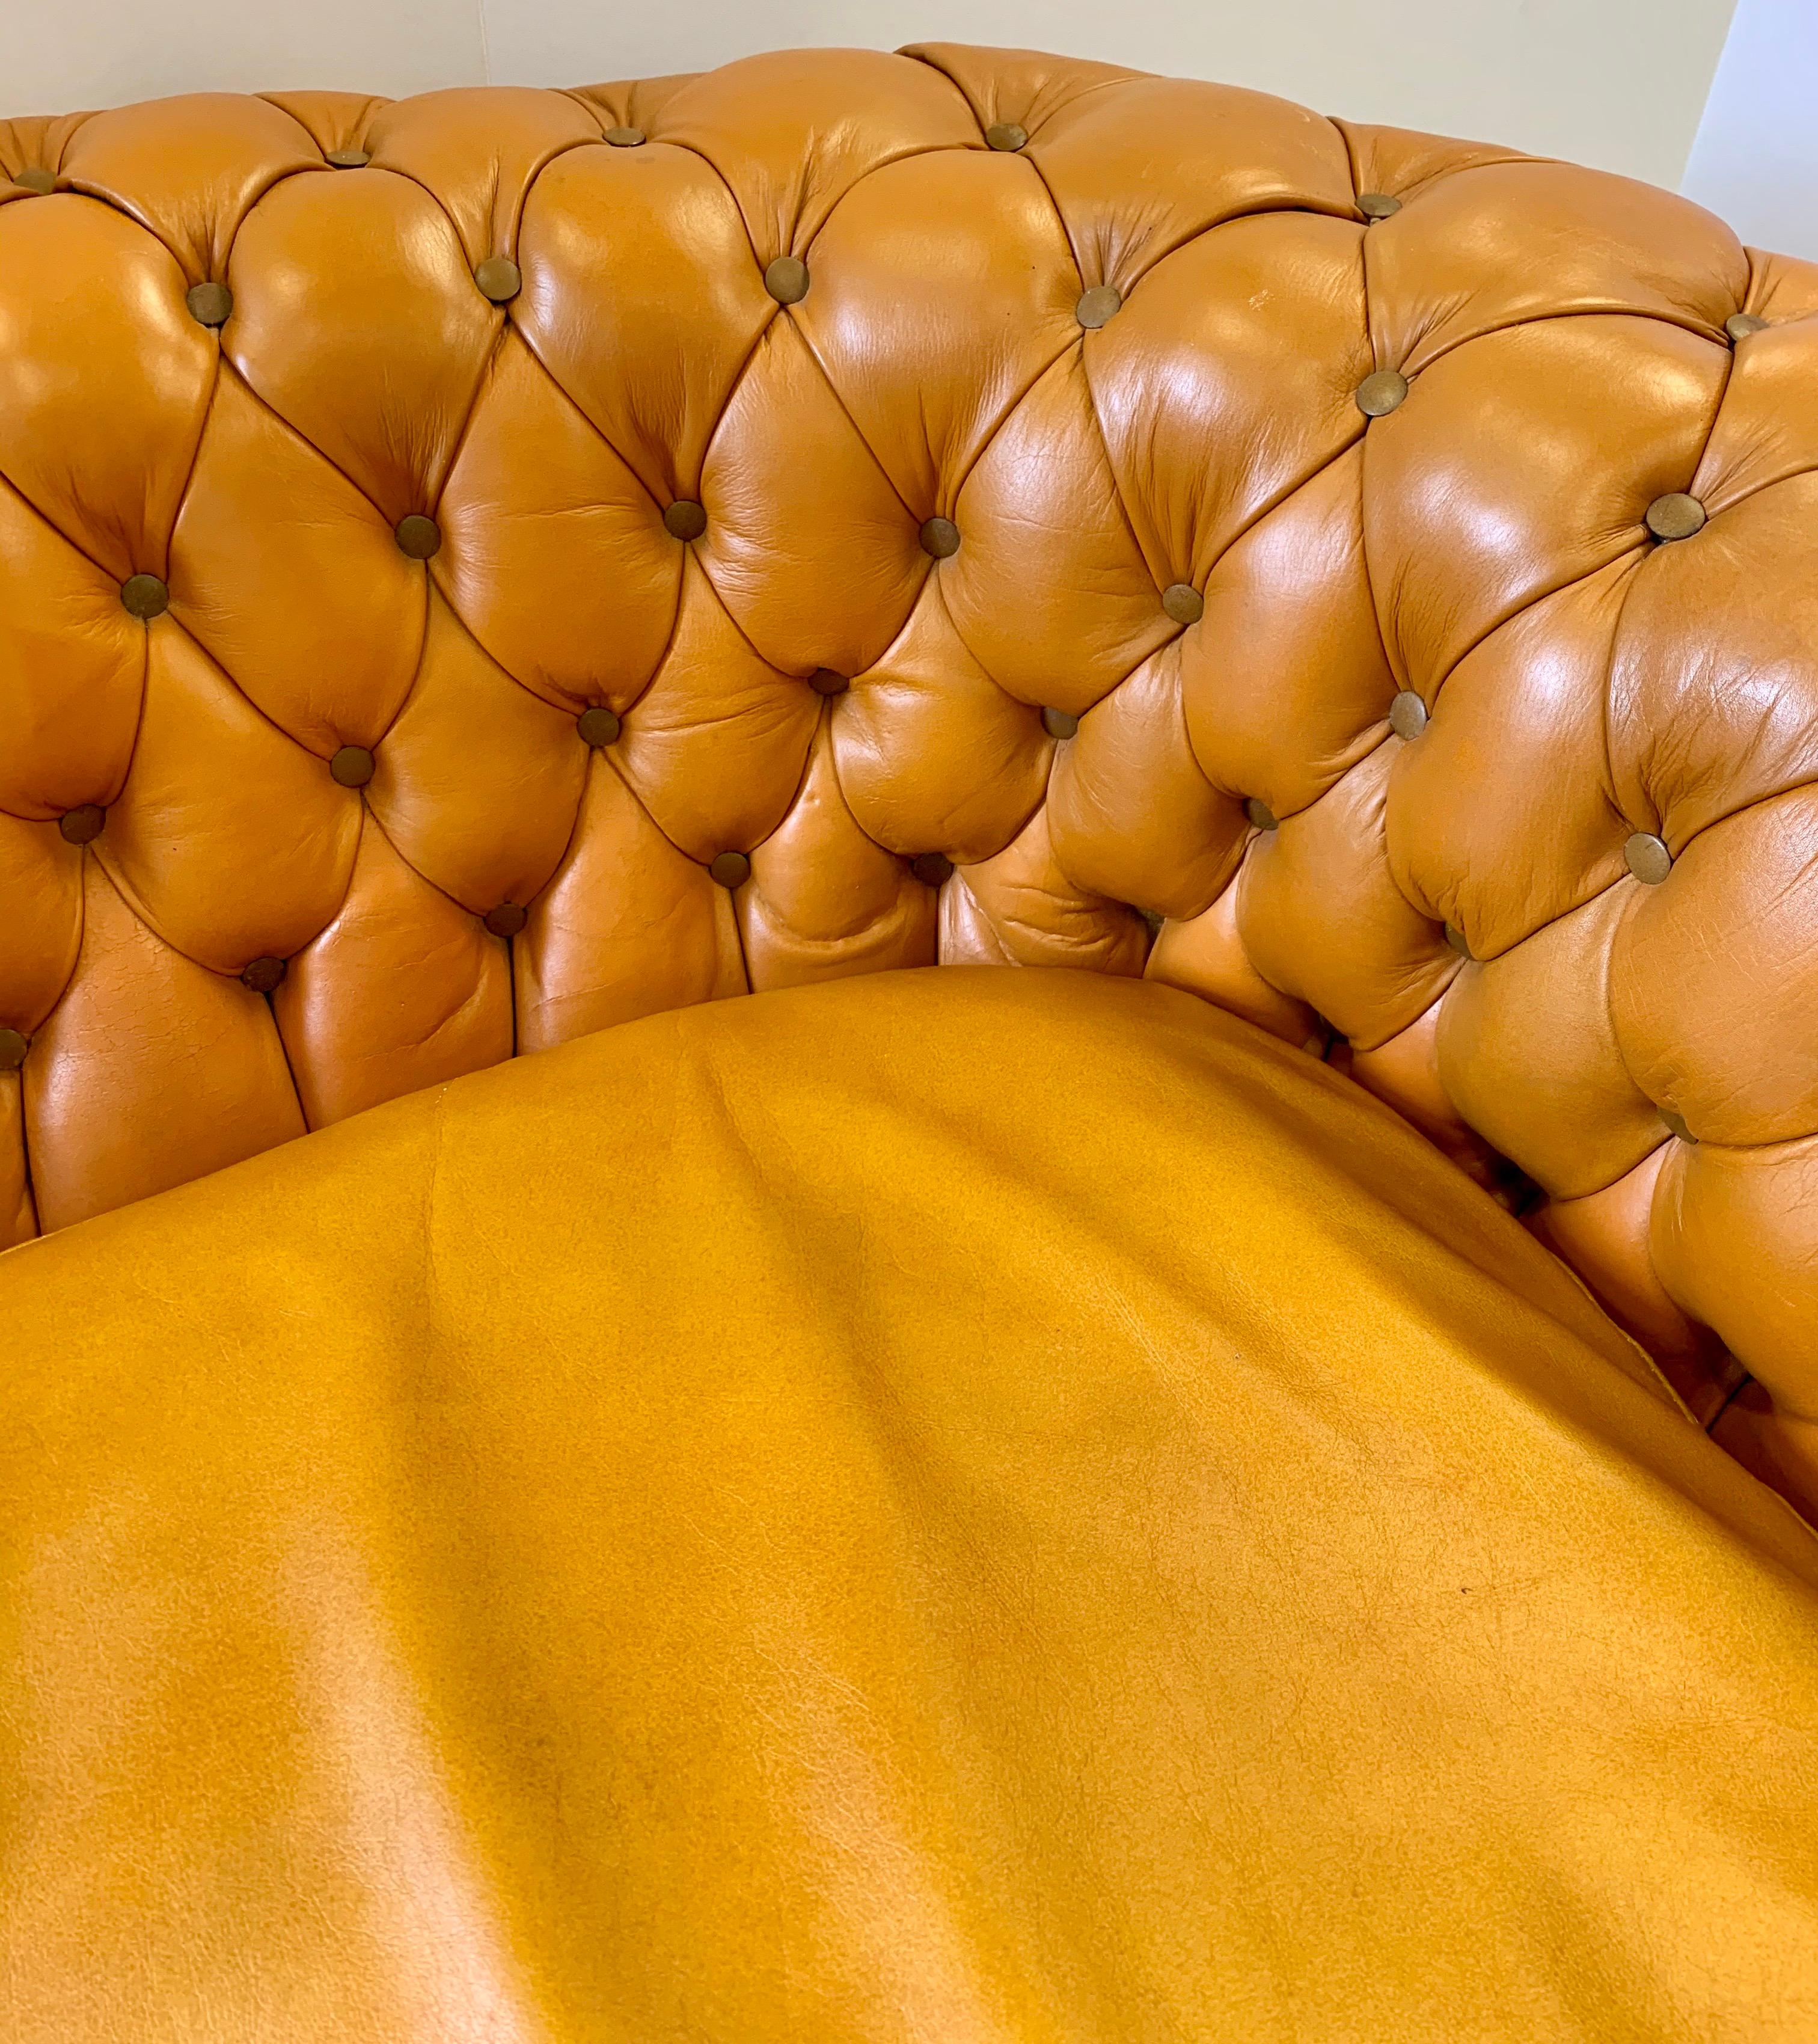 oversized chesterfield sofa